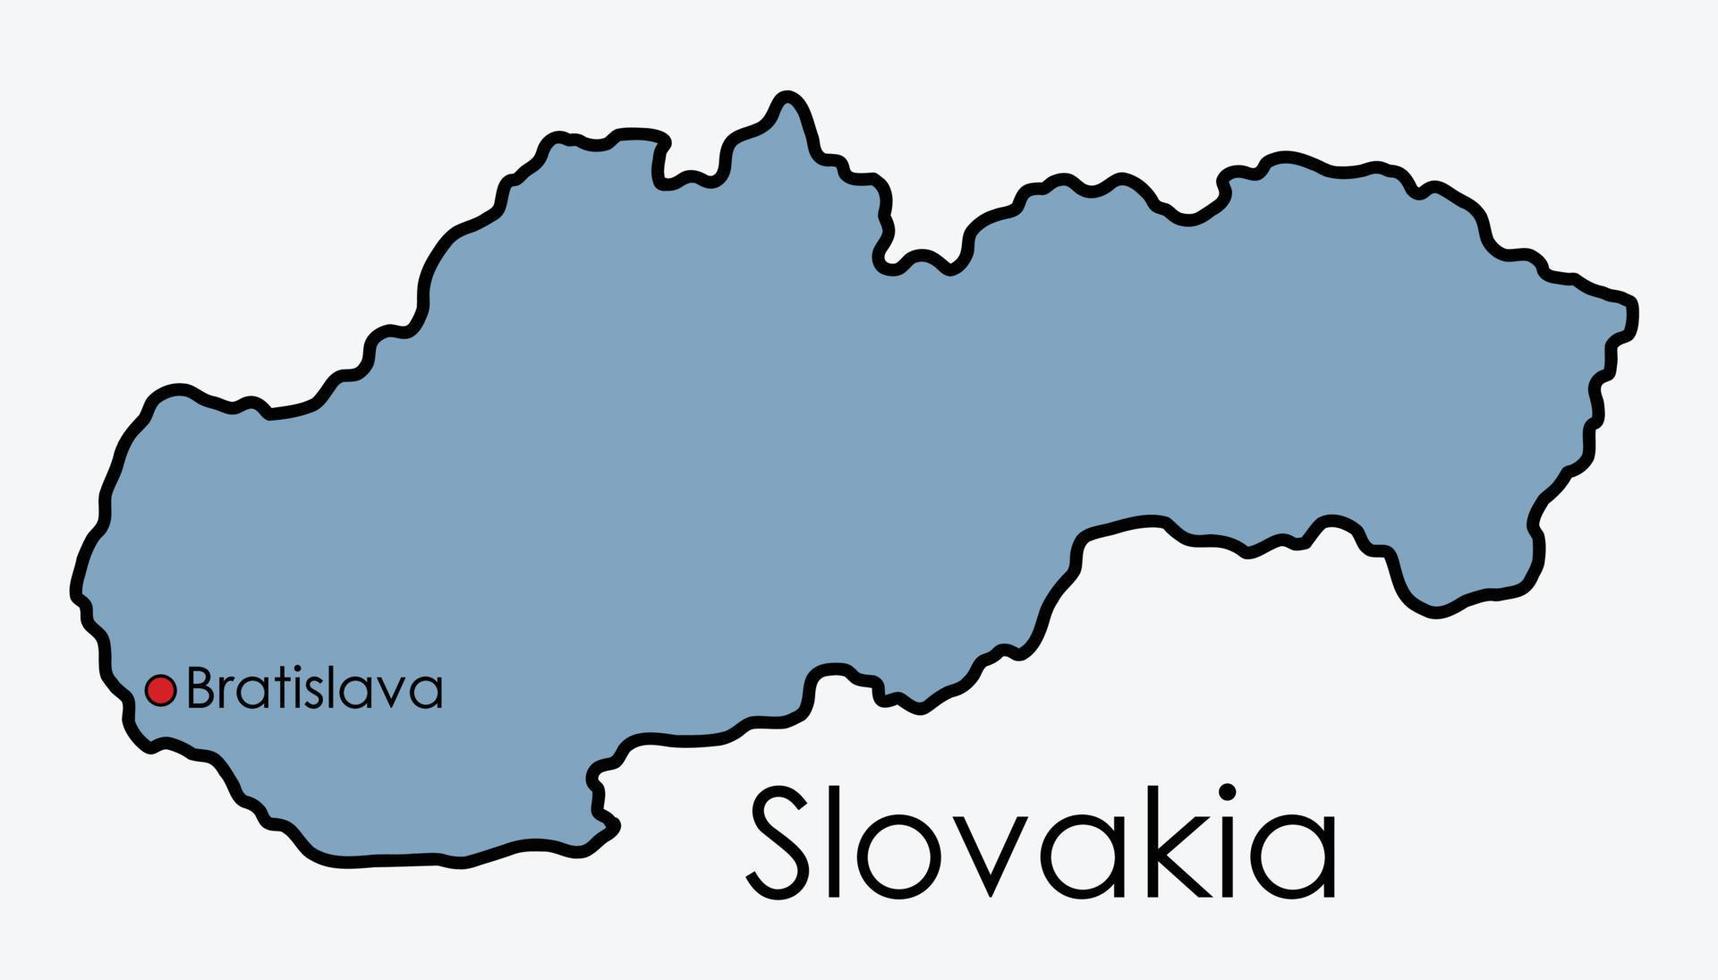 eslovaquia mapa dibujo a mano alzada sobre fondo blanco. vector